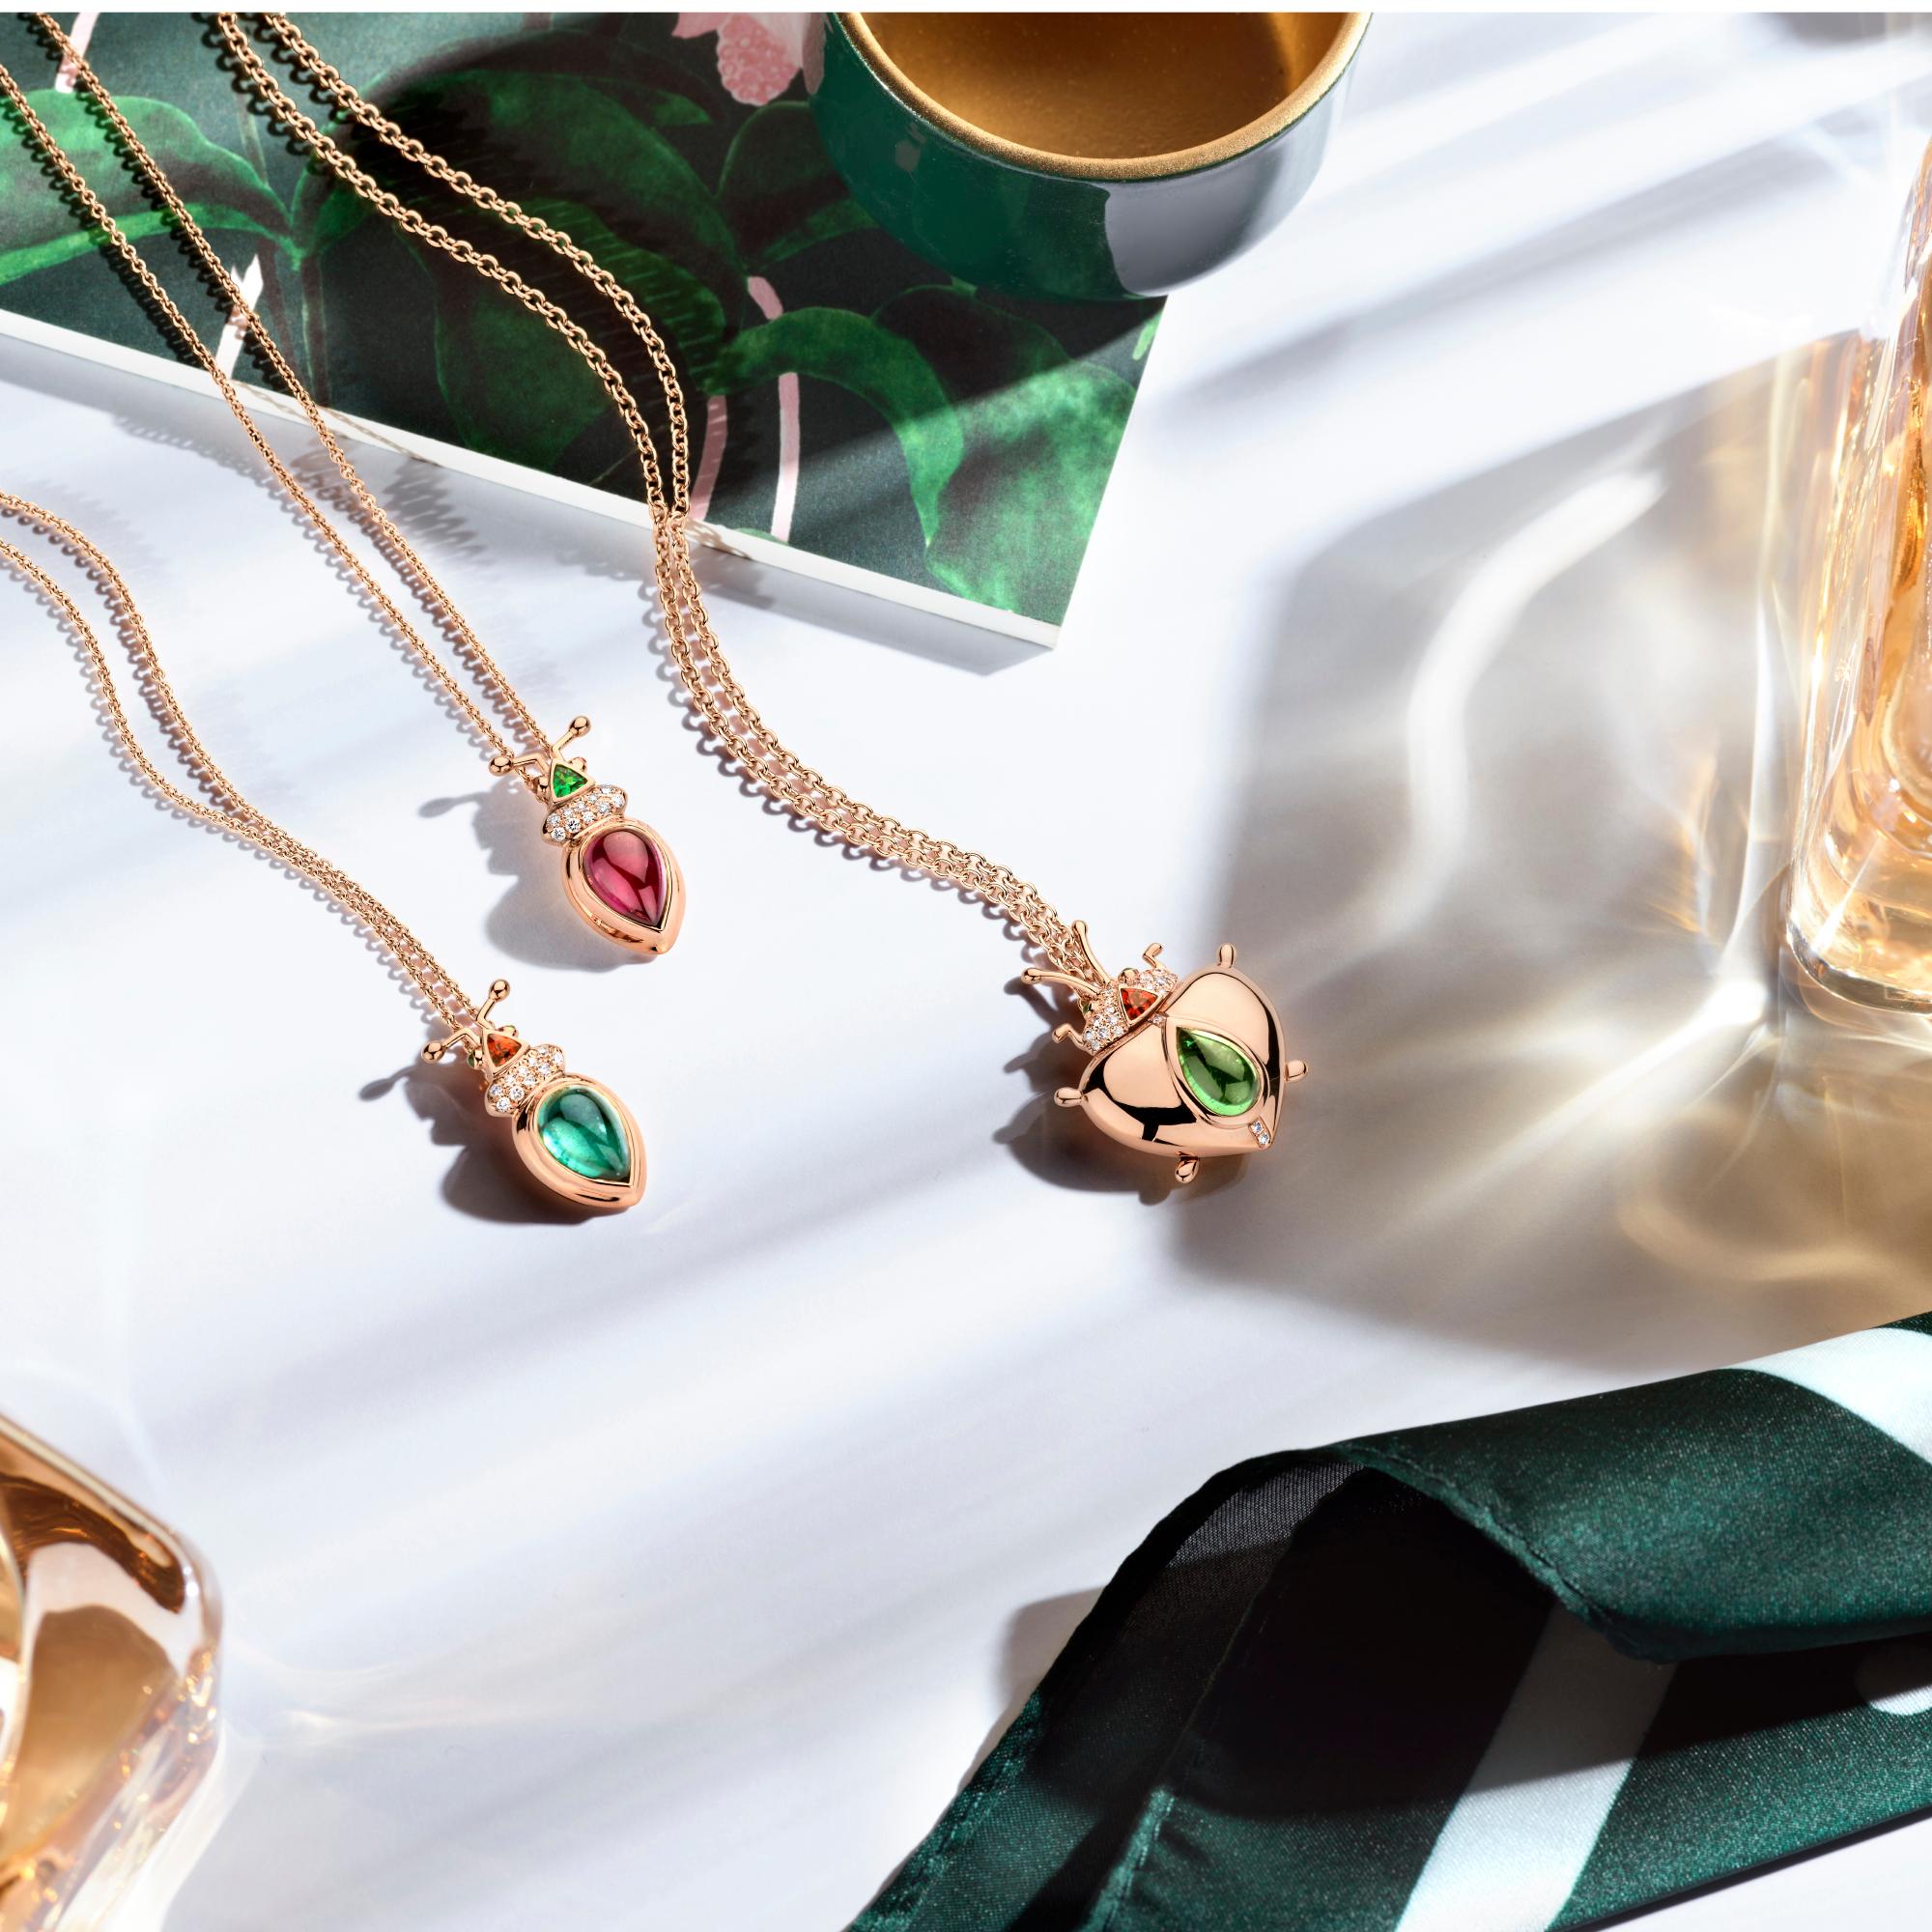 Cabochon 2, 00Ct Pink Tourmaline and Mandarin Garnet 18K Gold Diamond Pendant Necklace For Sale